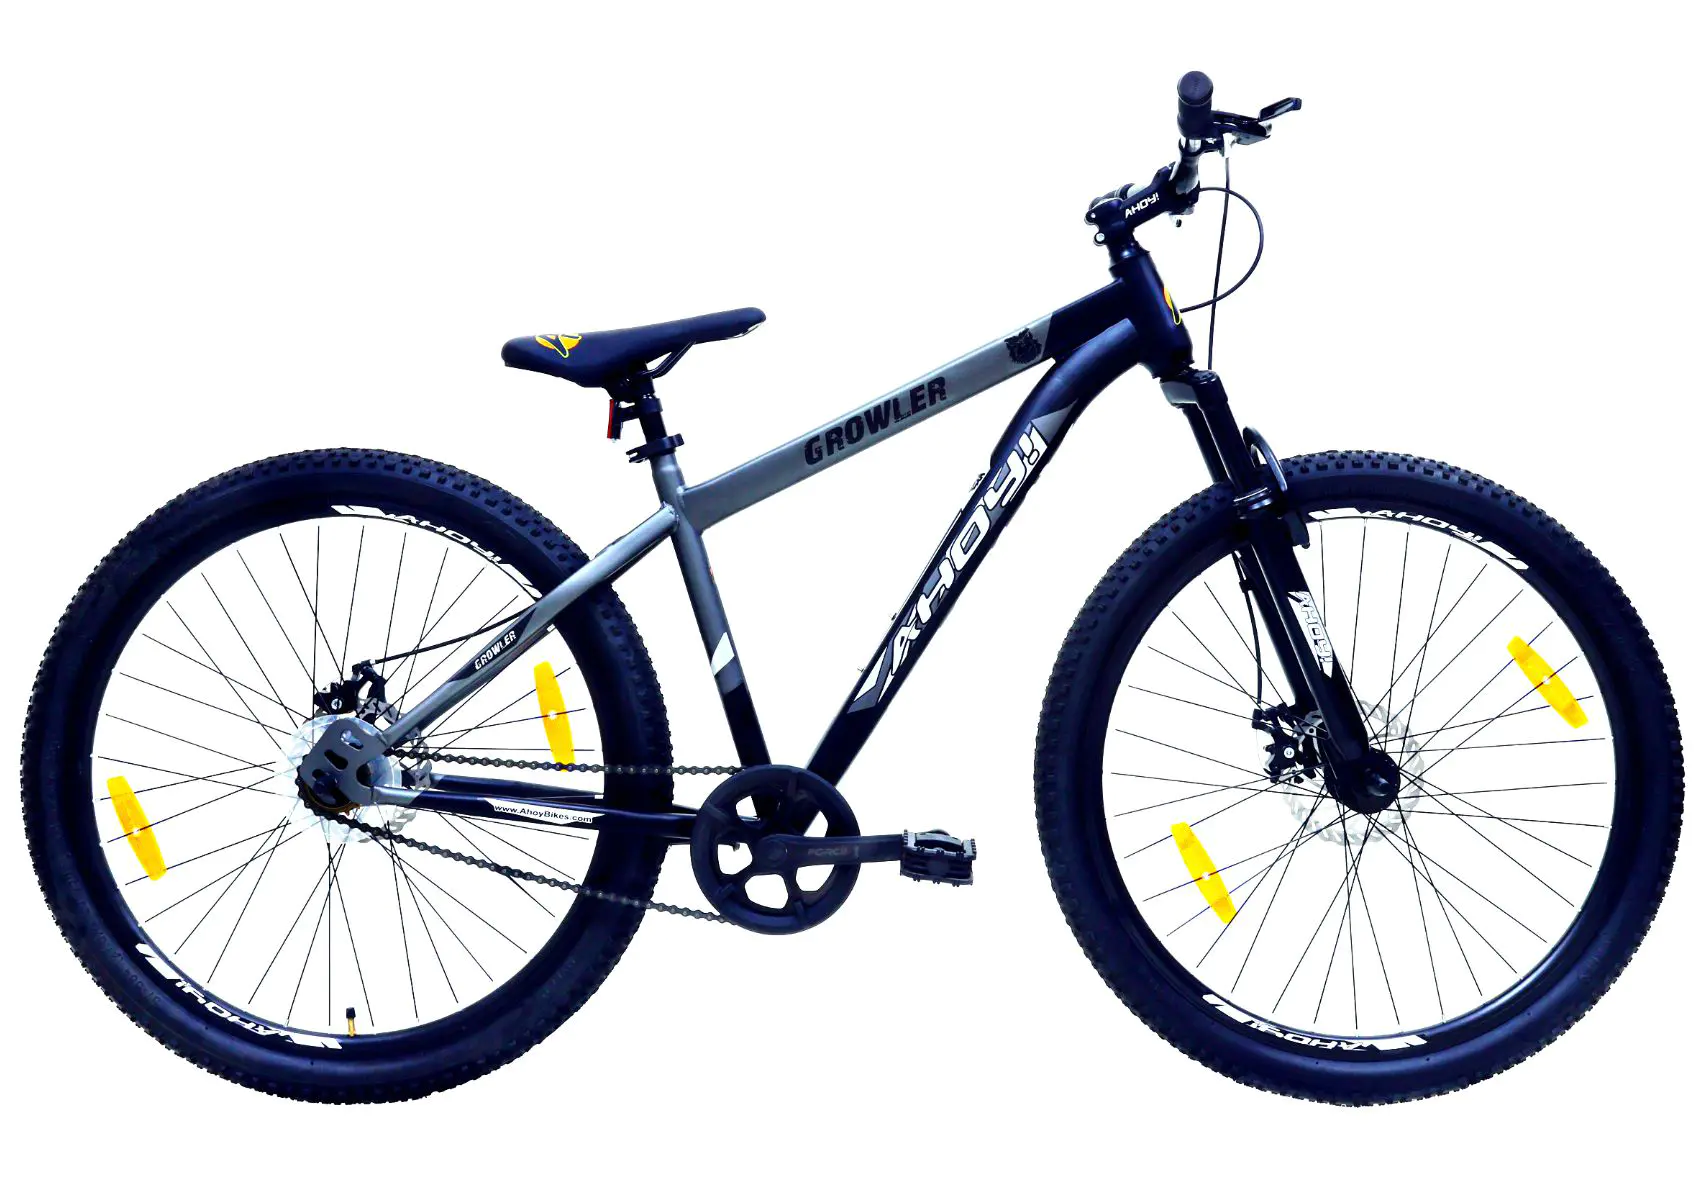 Growler Single Gear Bike 26T | Buy Grey Non Gear Cycle for Men